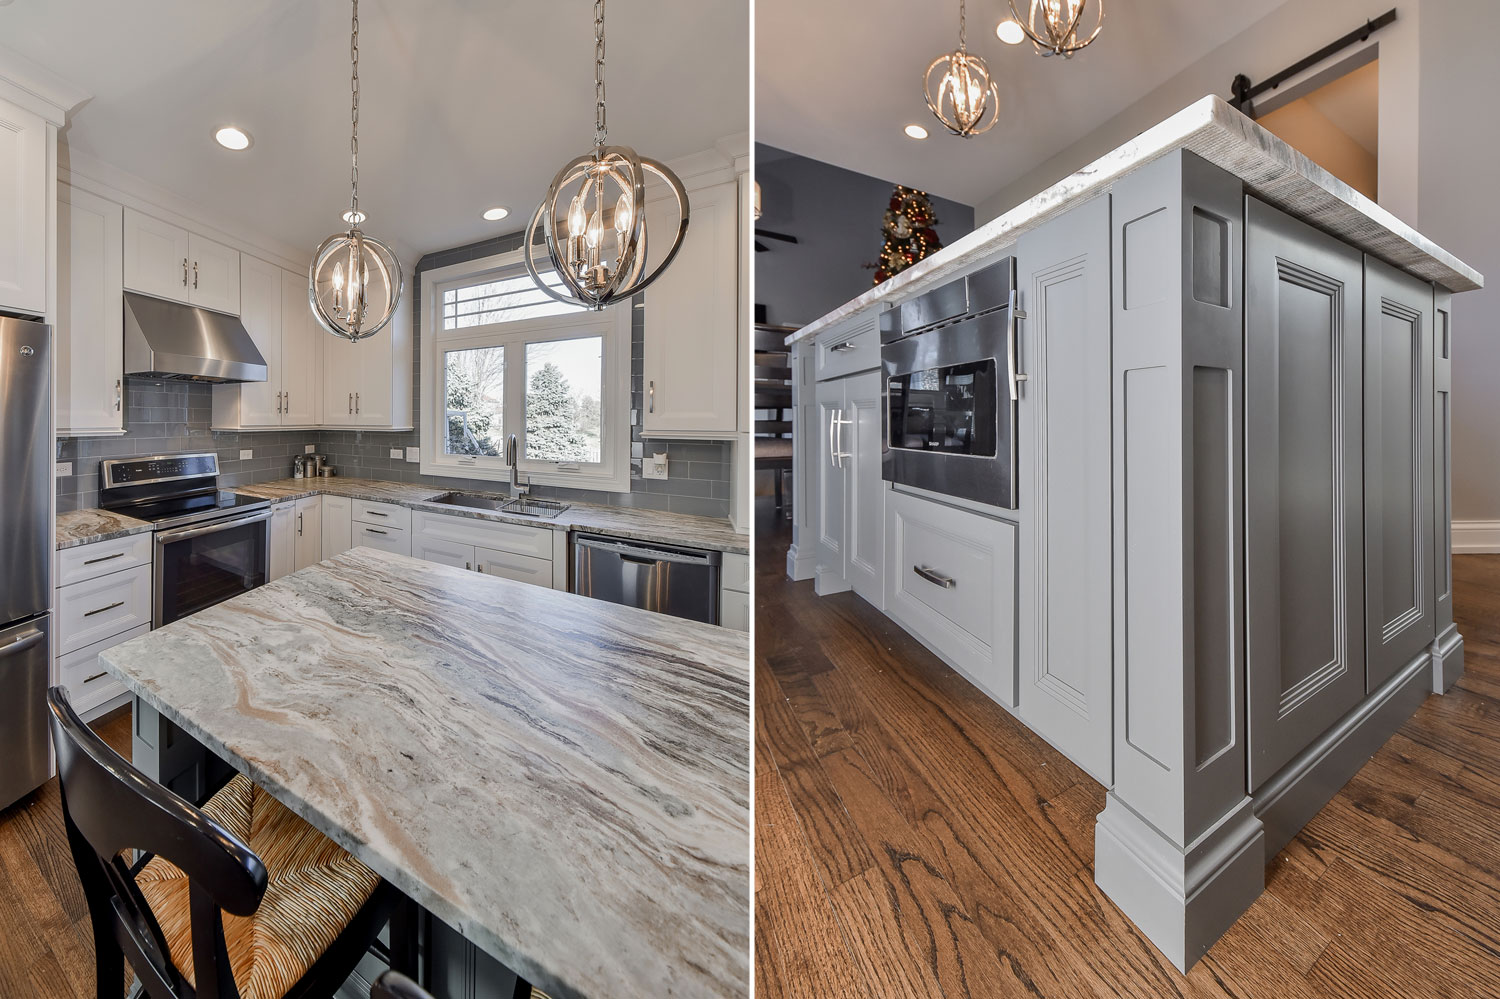 's Naperville Kitchen Remodel Pictures, Featuring White Quartz Countertops - Sebring Design Build